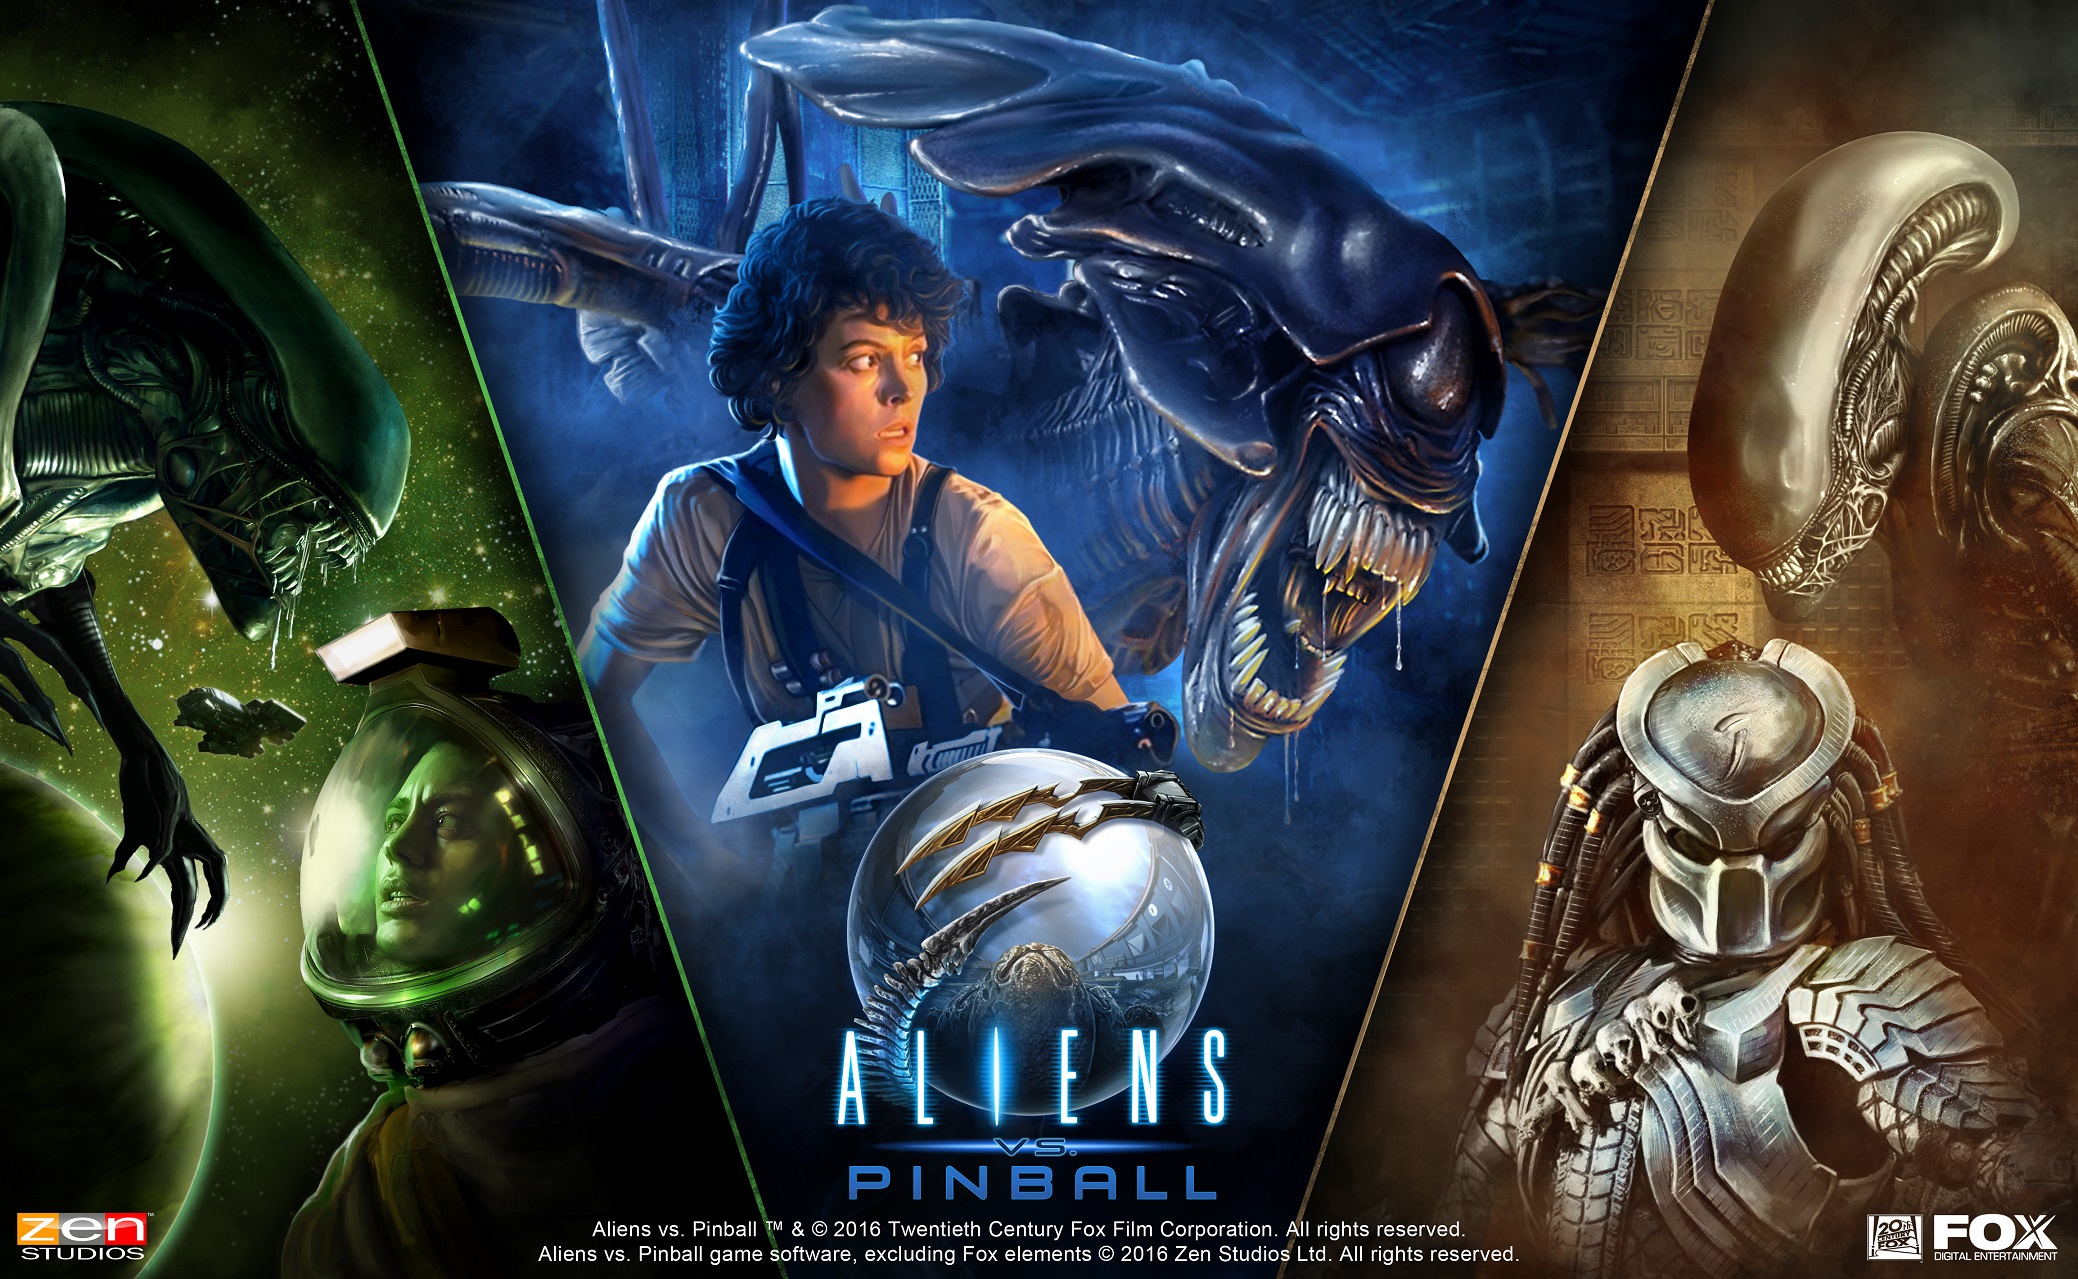 Aliens_vs_Pinball_key_art_300dp.jpg